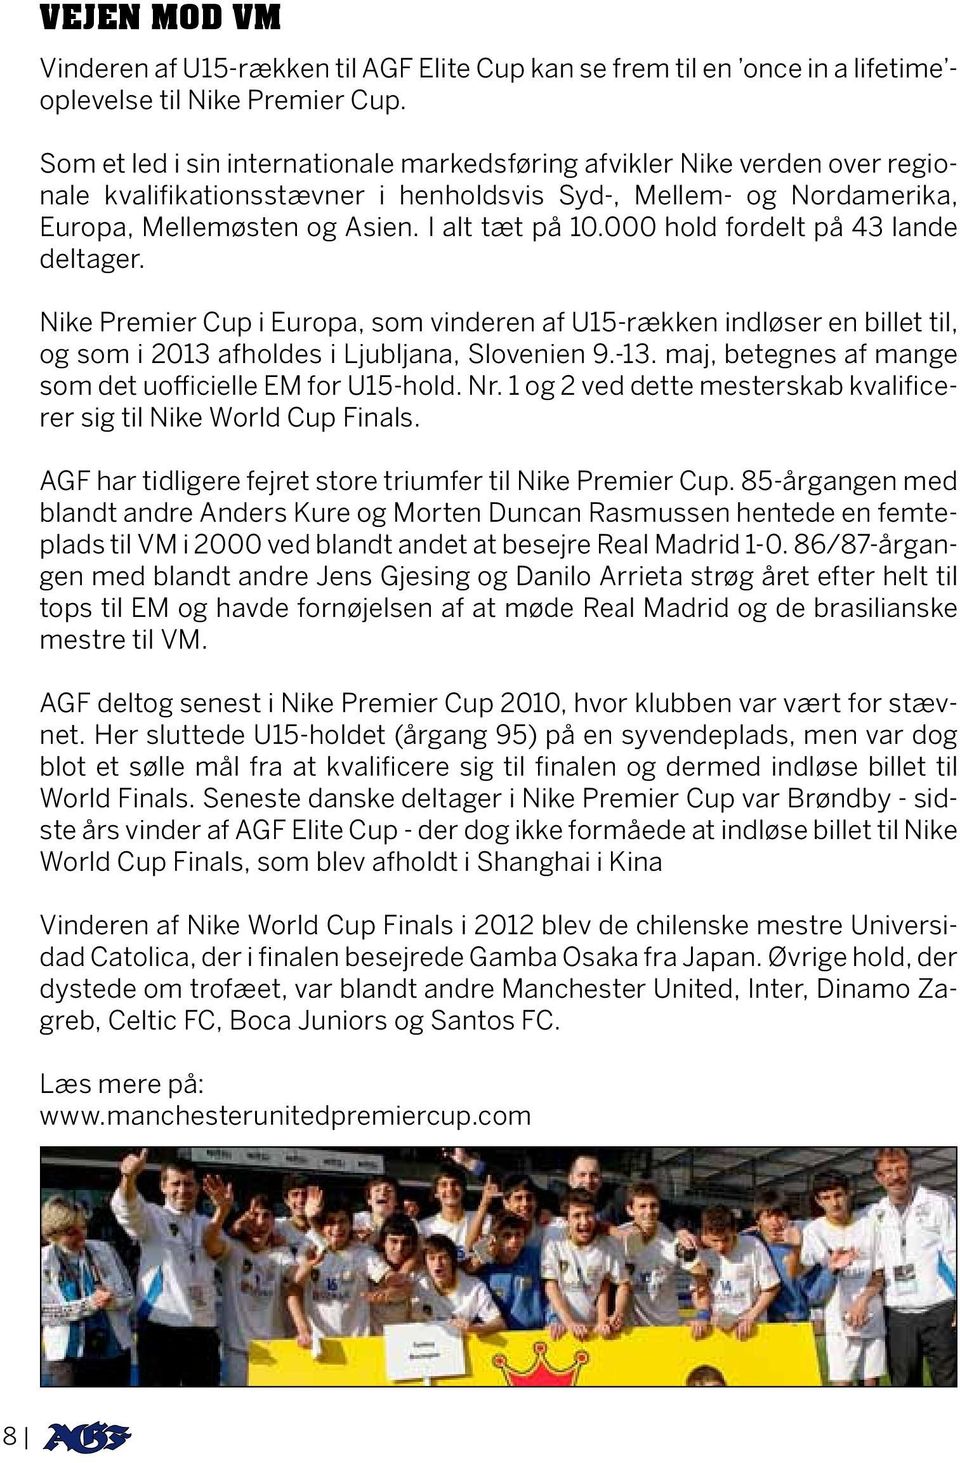 AGF ELITE CUP 2013 HOVEDSPONSOR AGF TALENT: - PDF Free Download